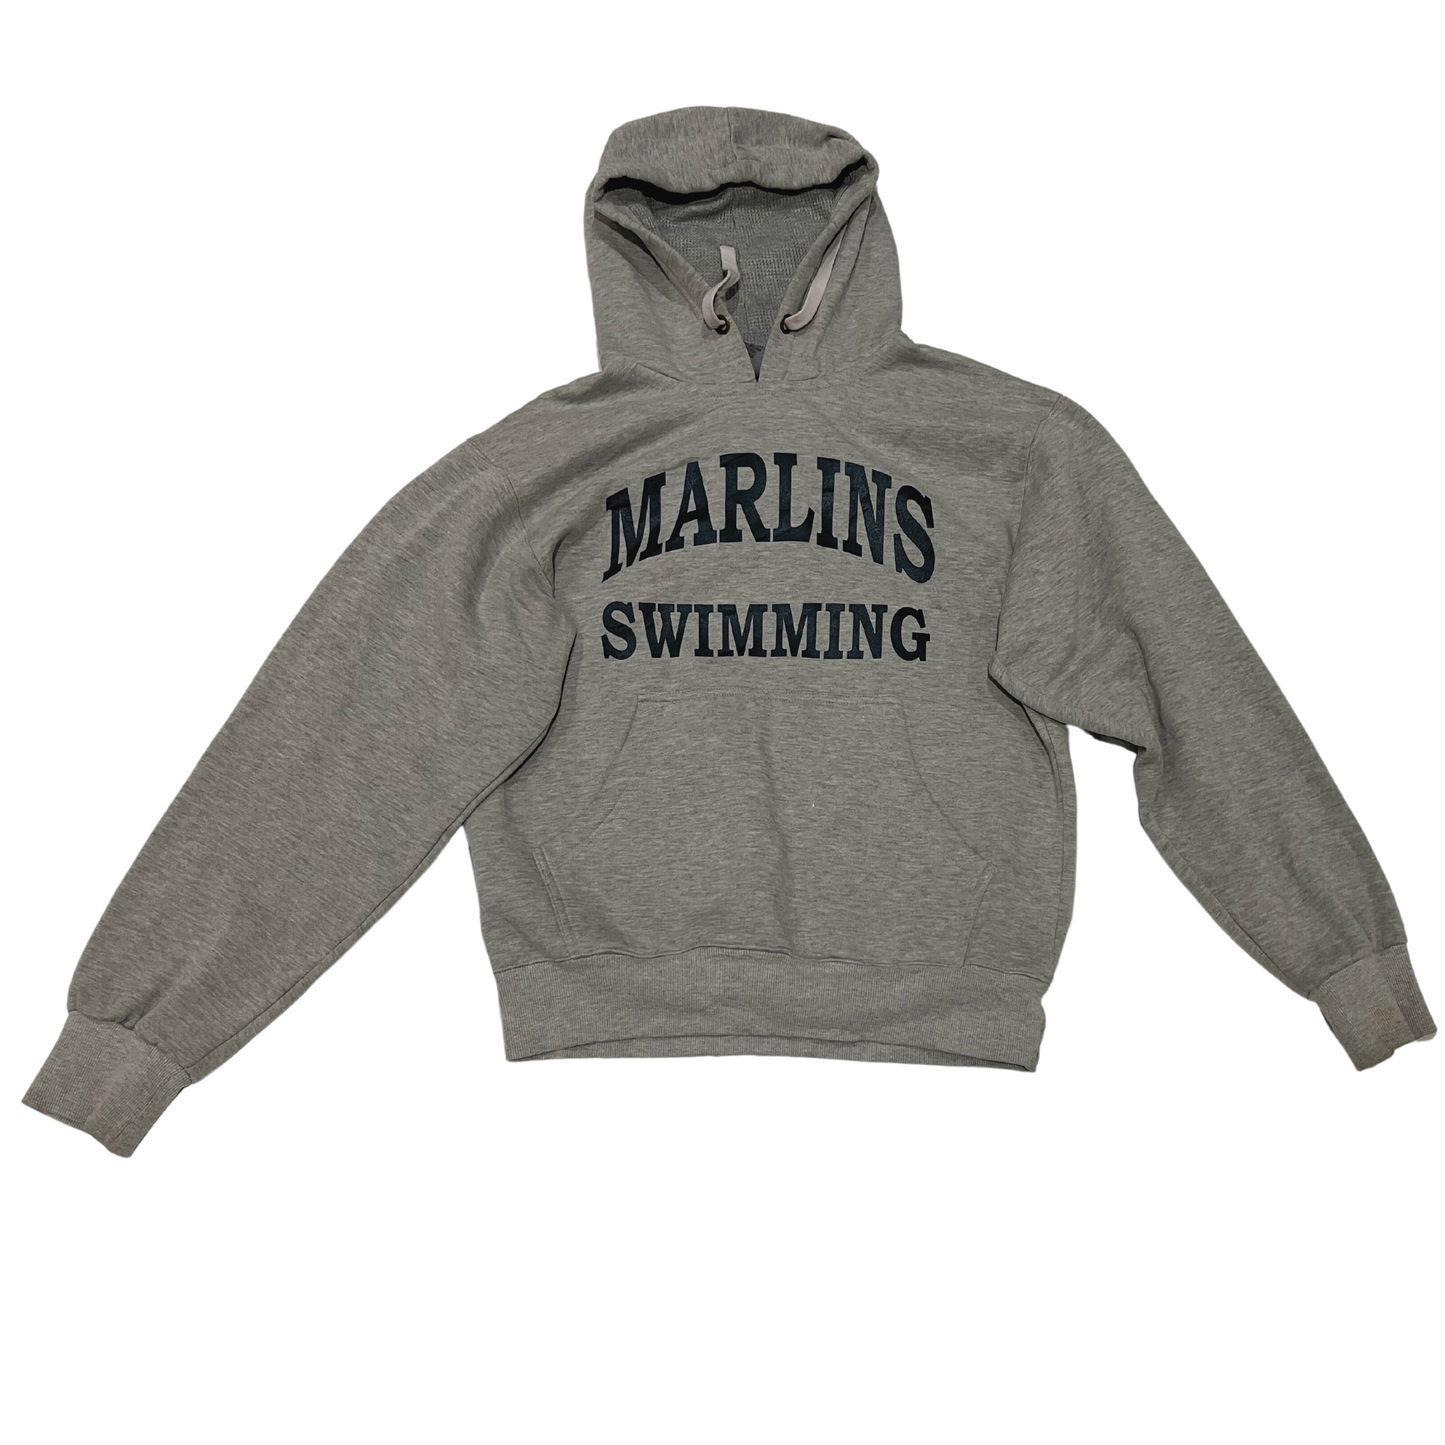 Marlins Swimming: Vintage American Sweatshirt | Size M